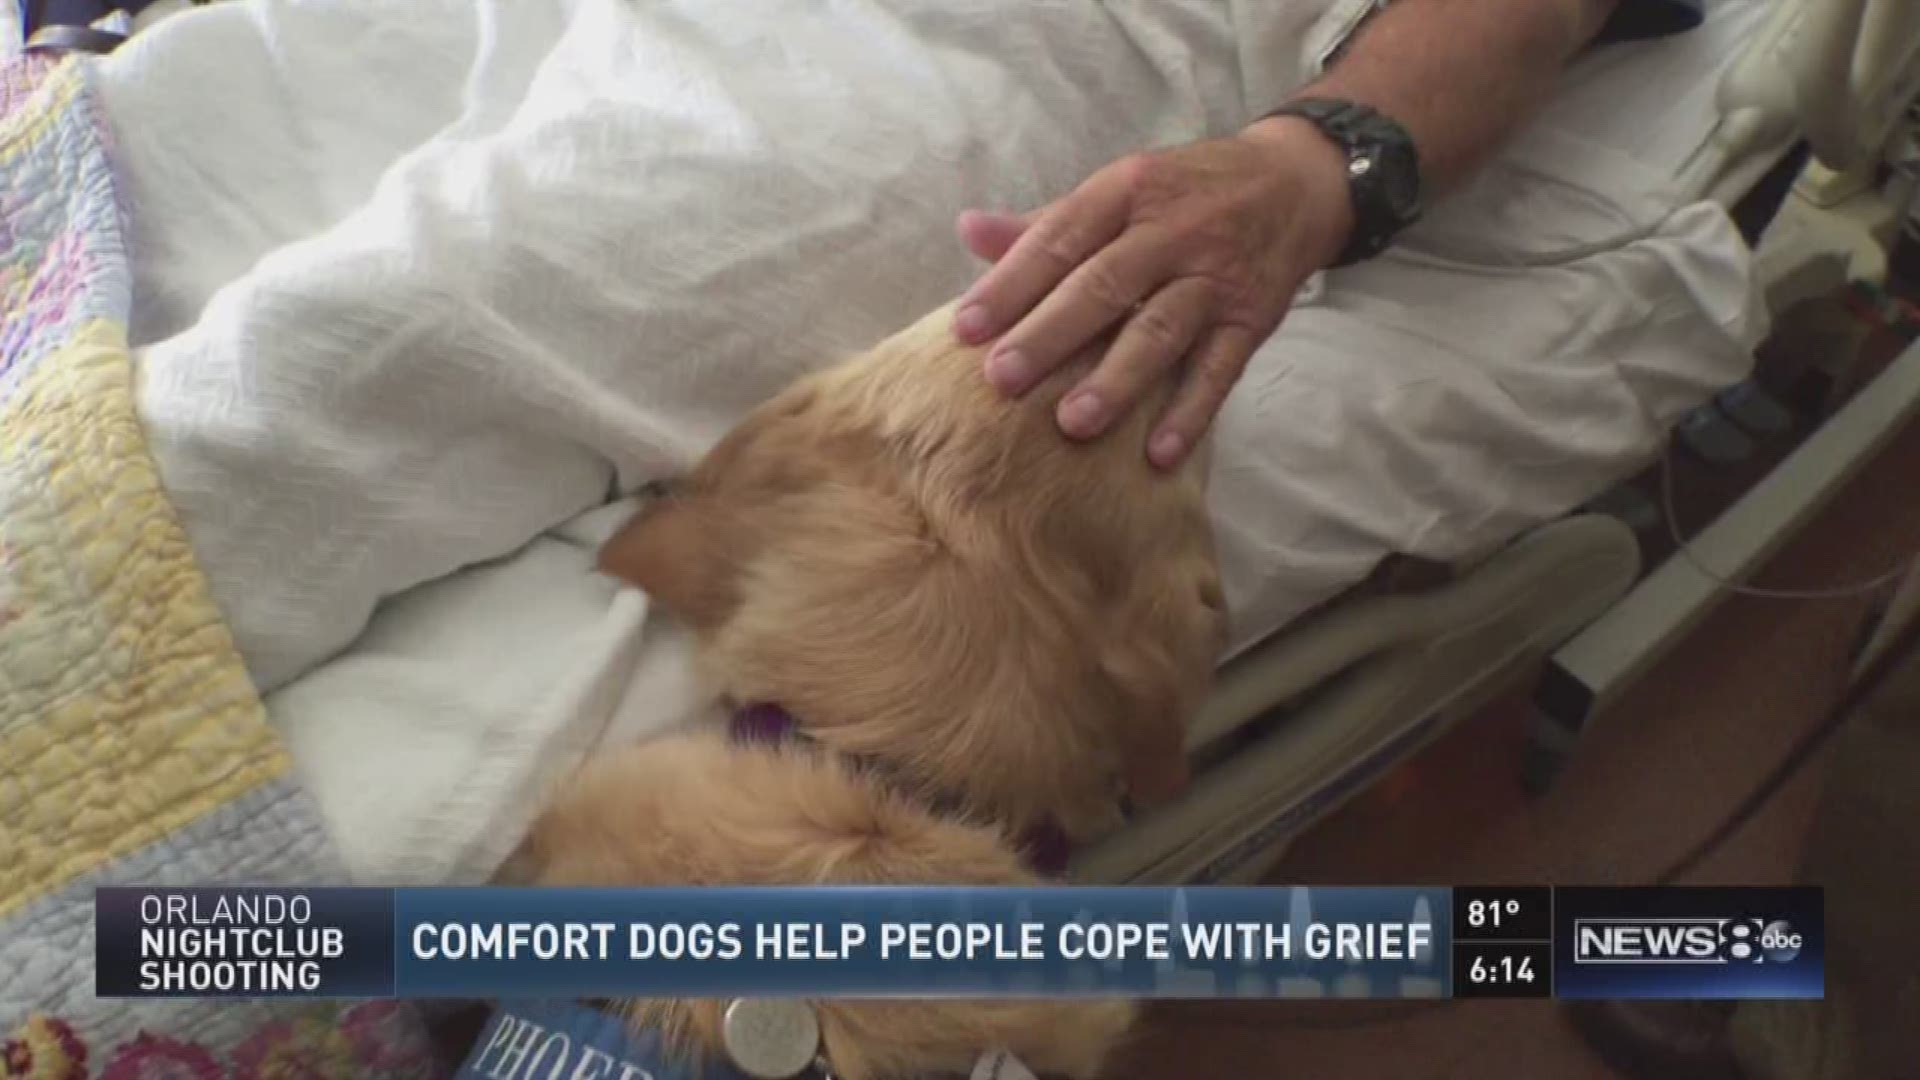 Phoebe the comfort dog helping Orlando victims